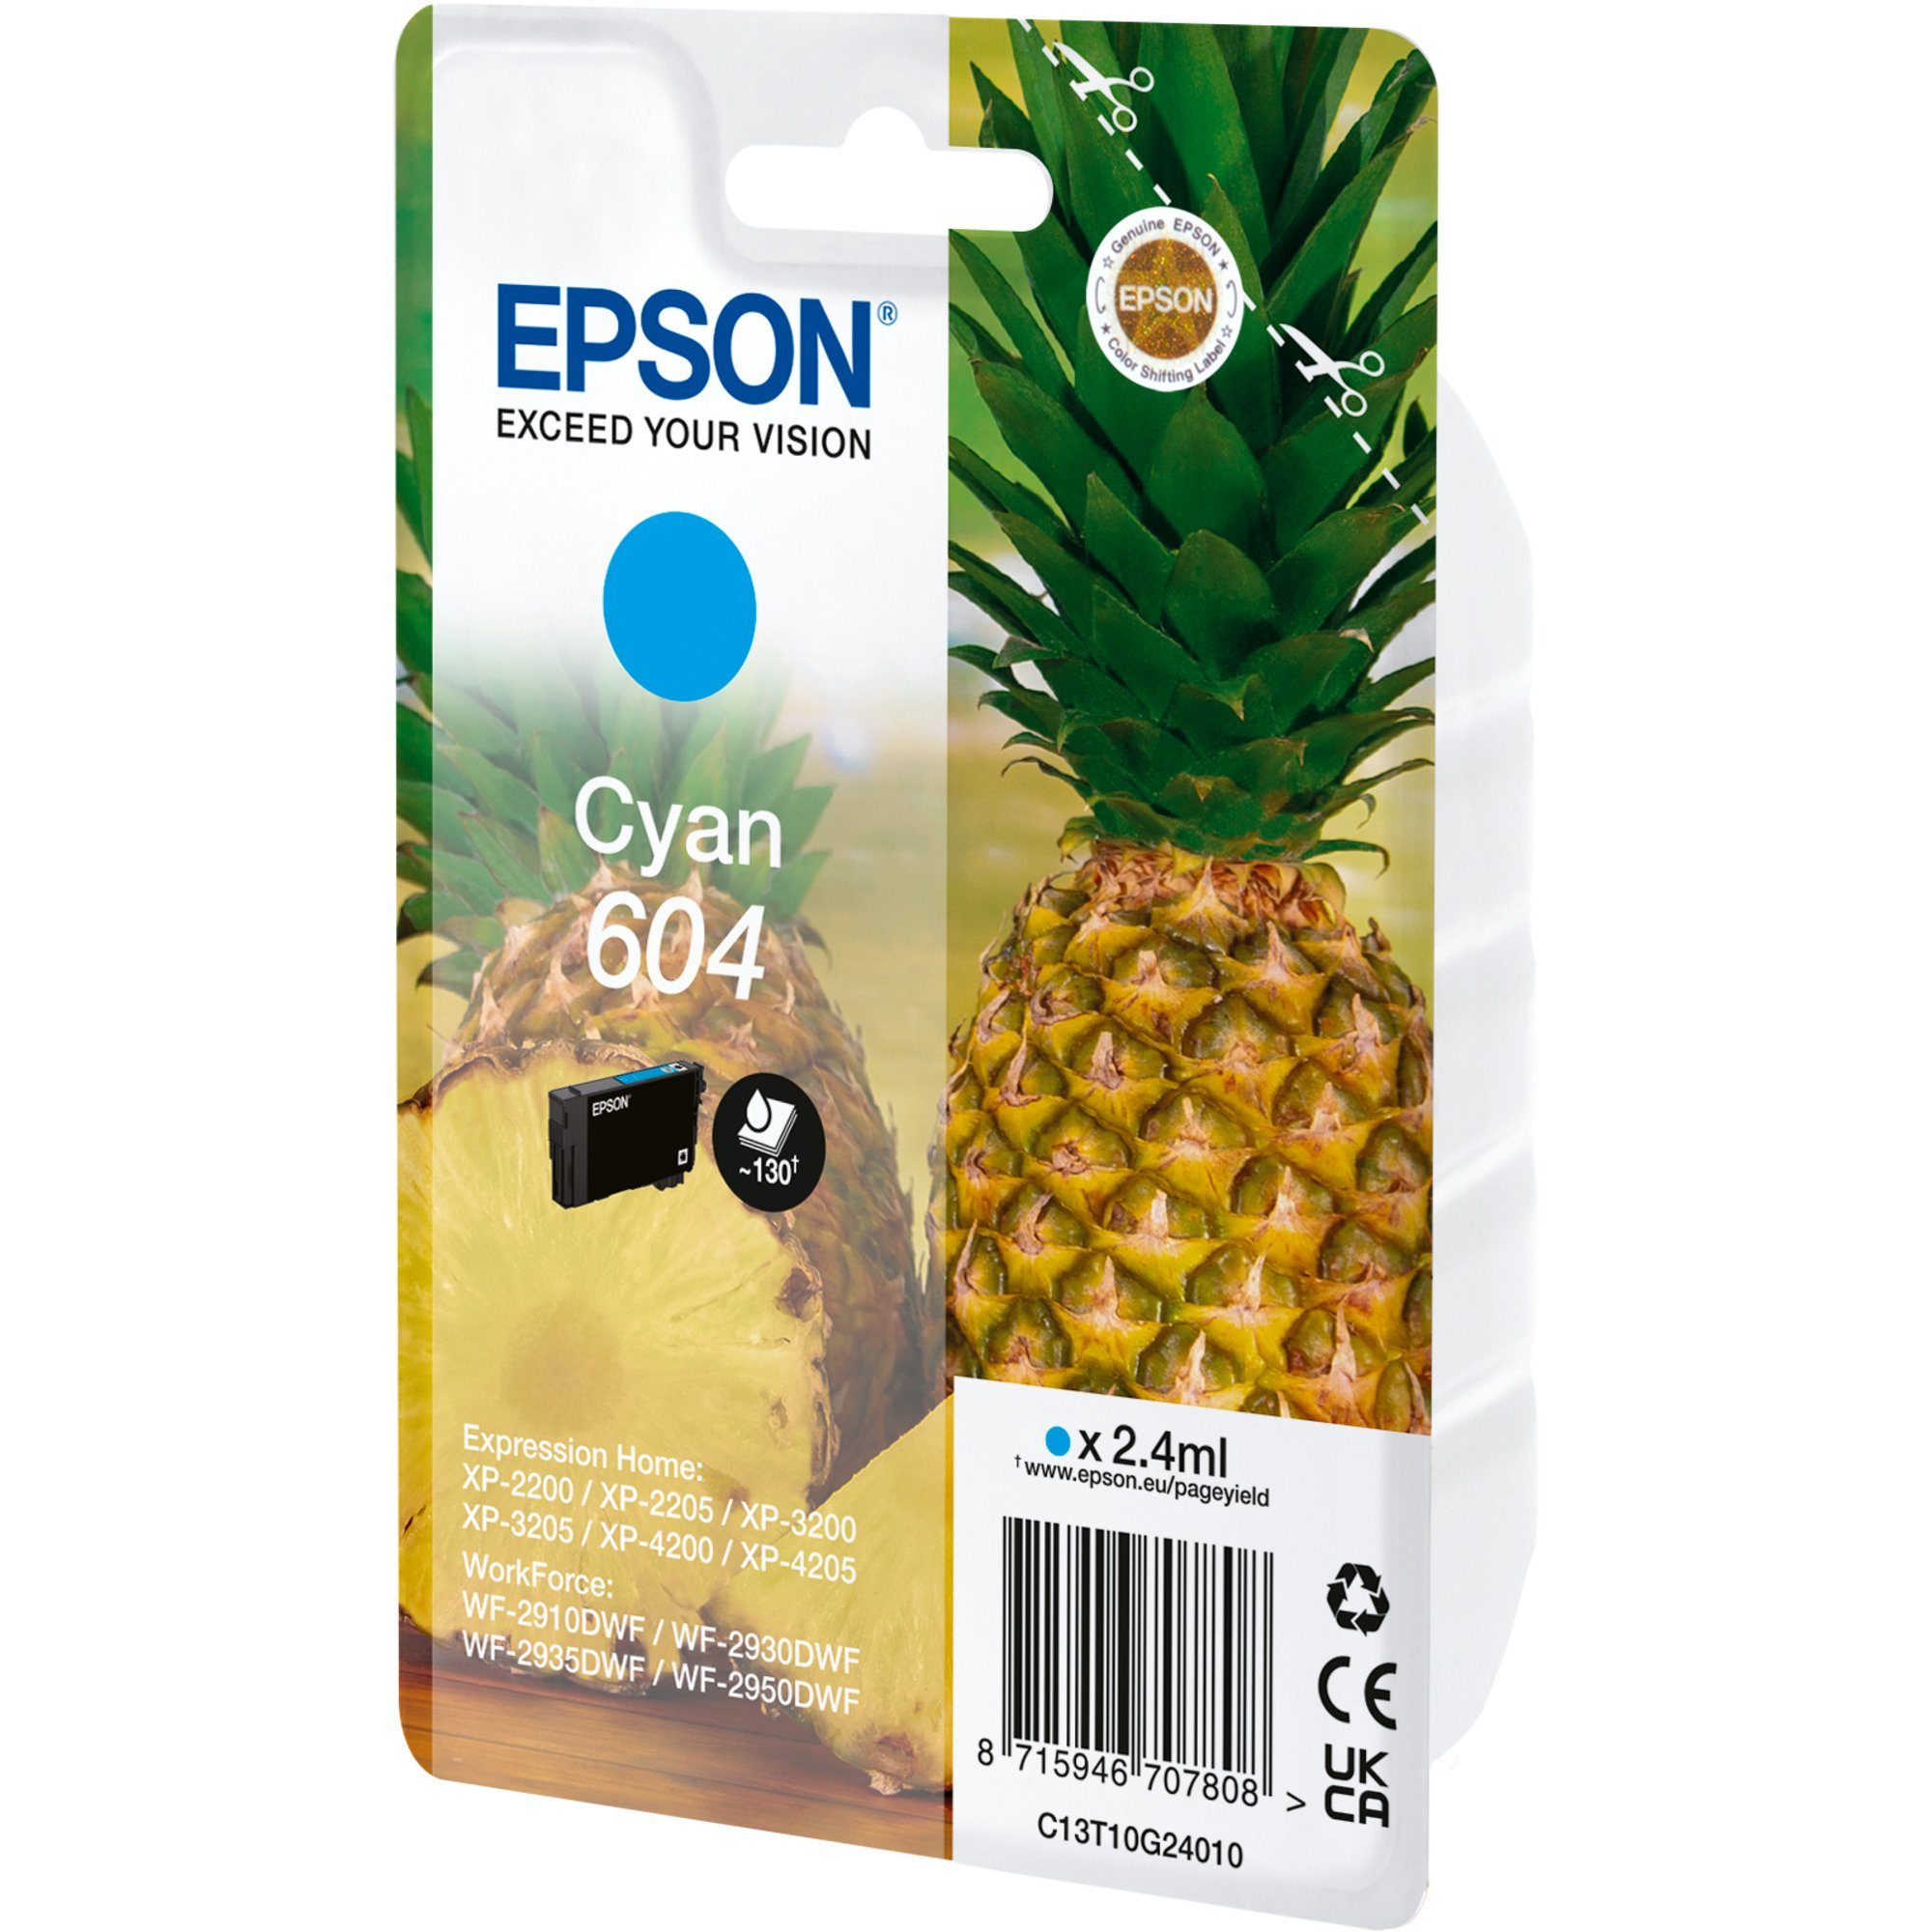 Epson Epson Tinte cyan Tintenpatrone (C13T10G24010) 604